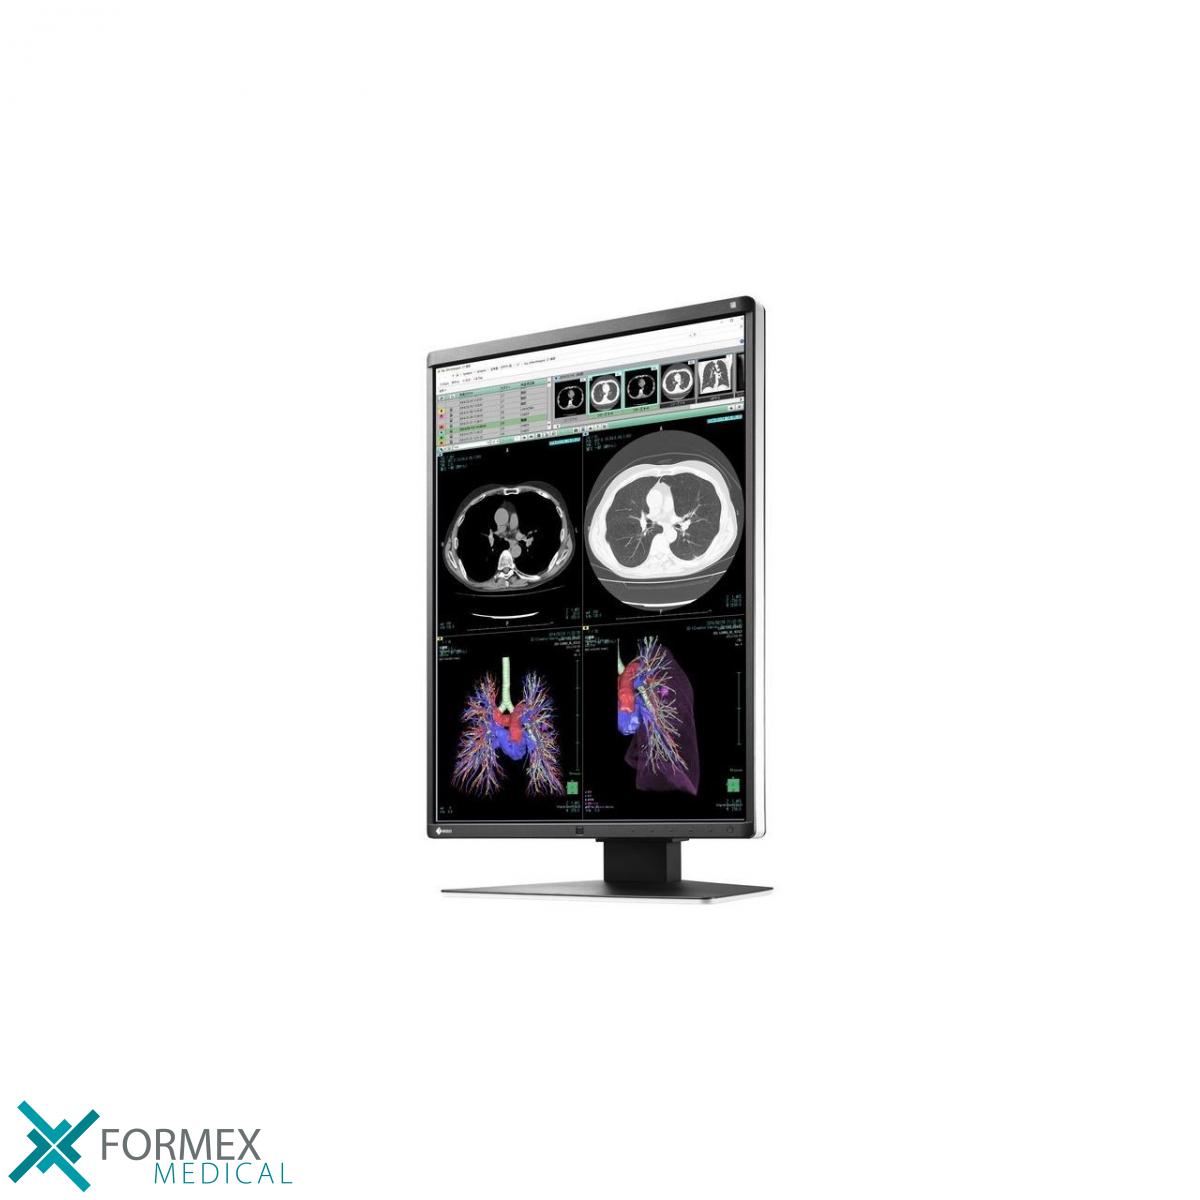 Eizo RX360 RadiForce, medical displays, medische schermen, eizo medical monitor, medische monitoren, eizo medical, medische beeldschermen, diagnostische monitoren, diagnostiek monitoren, eizo monitor